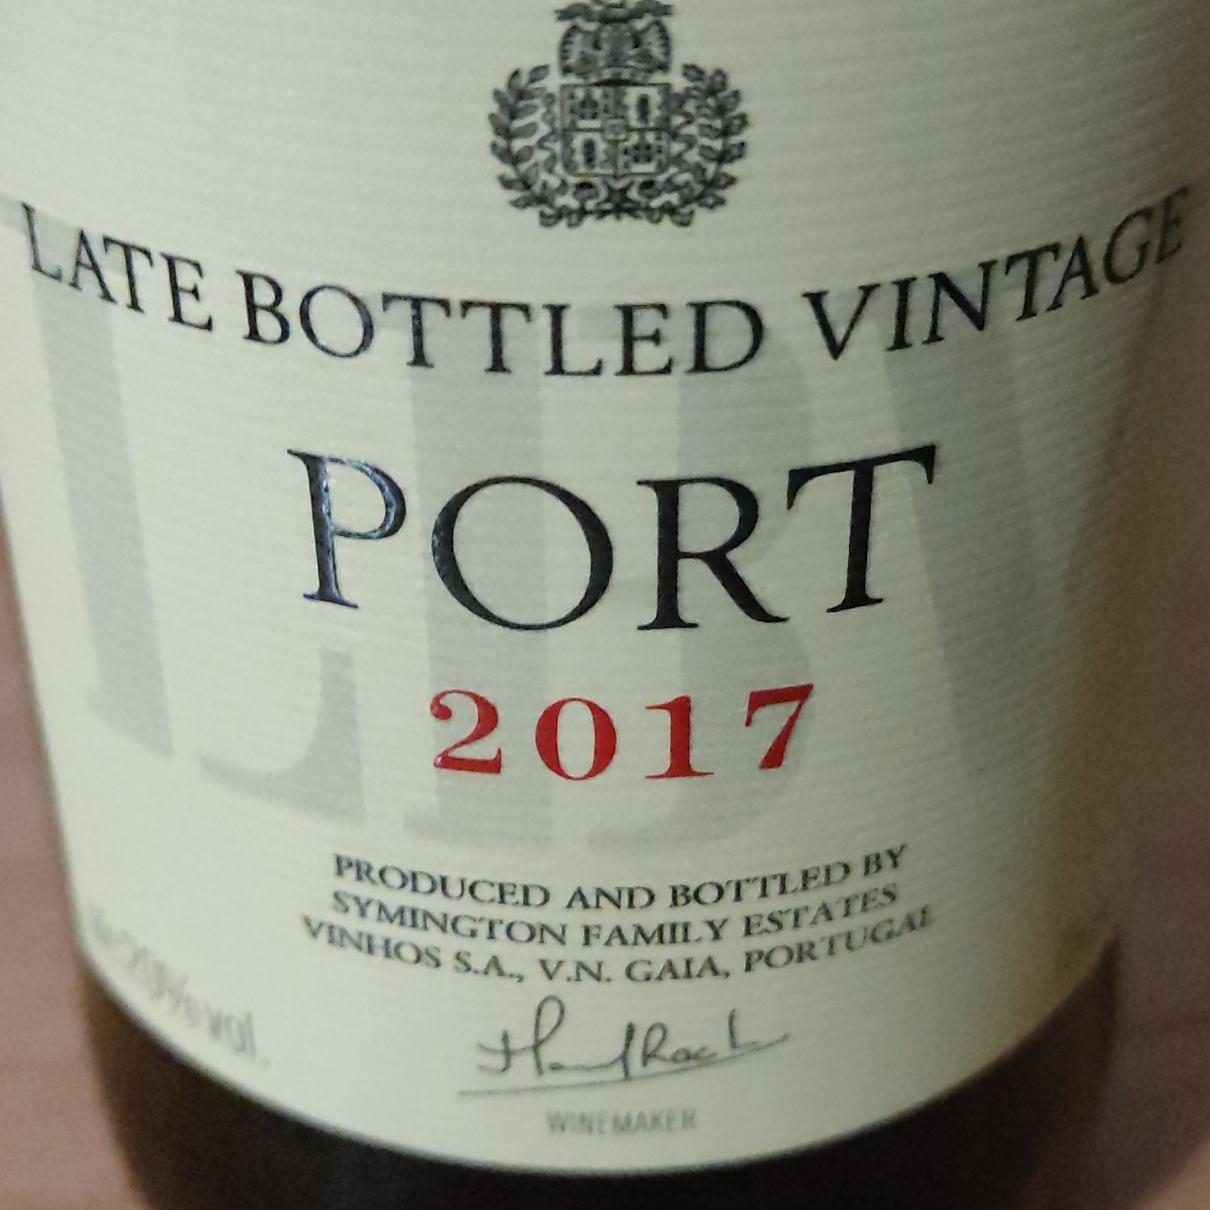 Fotografie - Late Bottle Vintage Port 2017 Tesco Finest